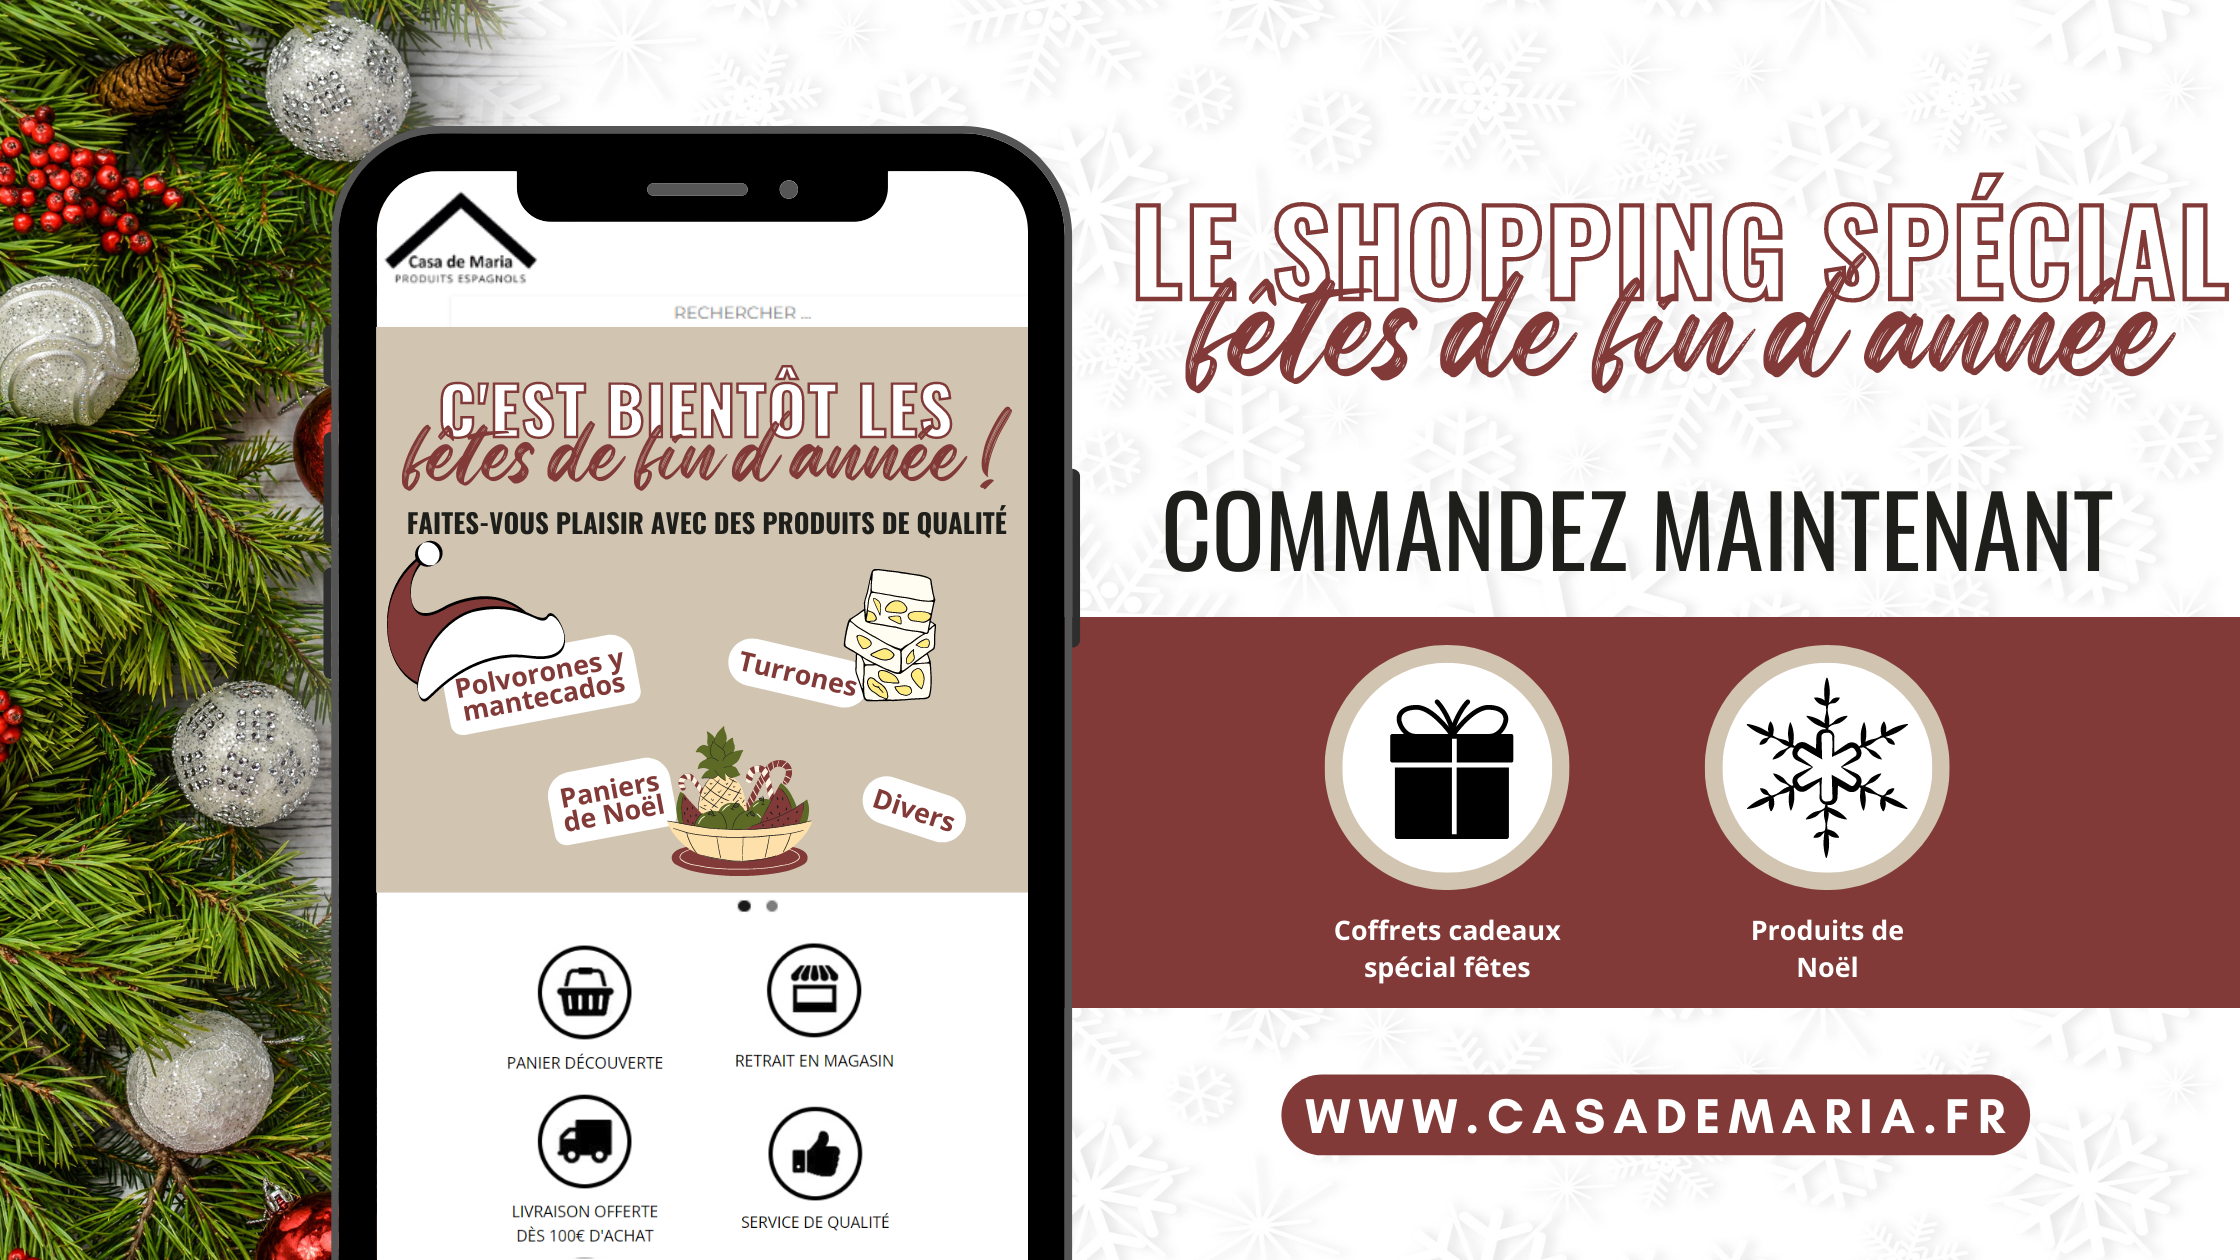 https://www.casademaria.fr/store/produits-noel